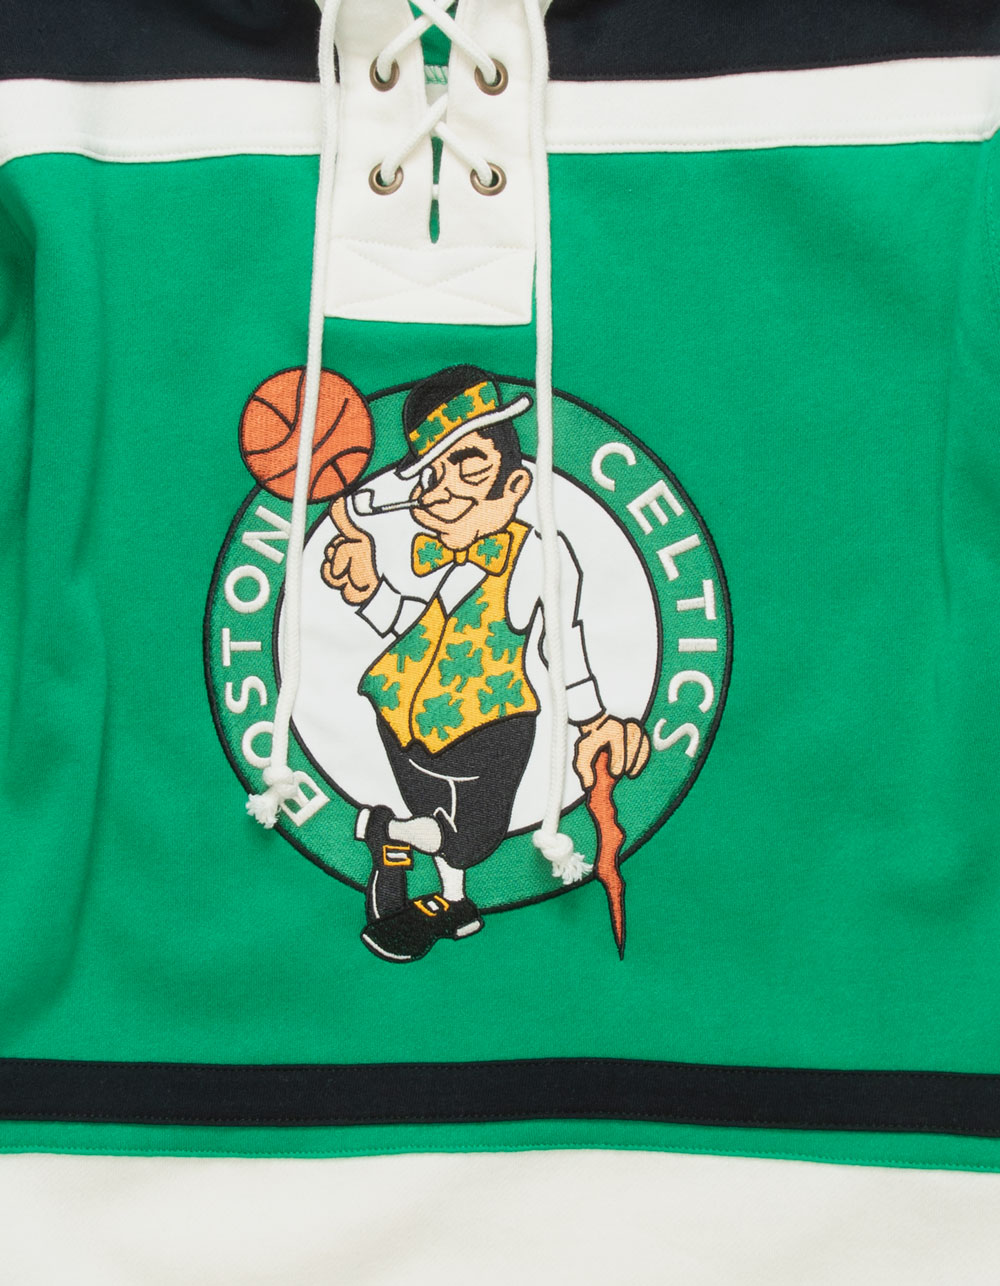 Adidas Boston Celtics SEWN Hoodie Hoody Sweatshirt sz L Large